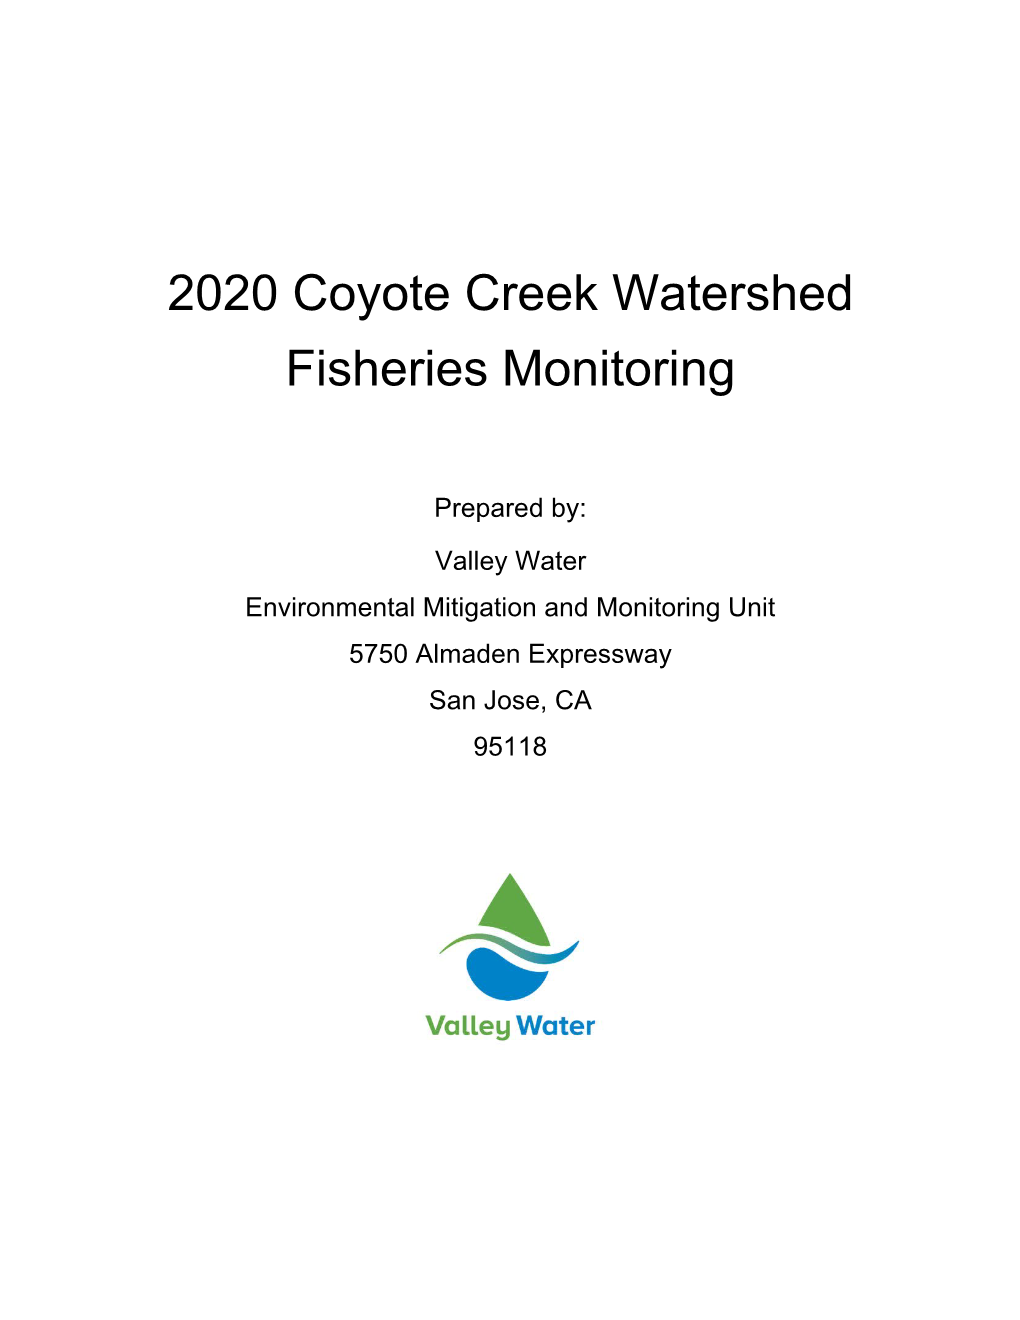 2020 Coyote Creek Watershed Fisheries Monitoring